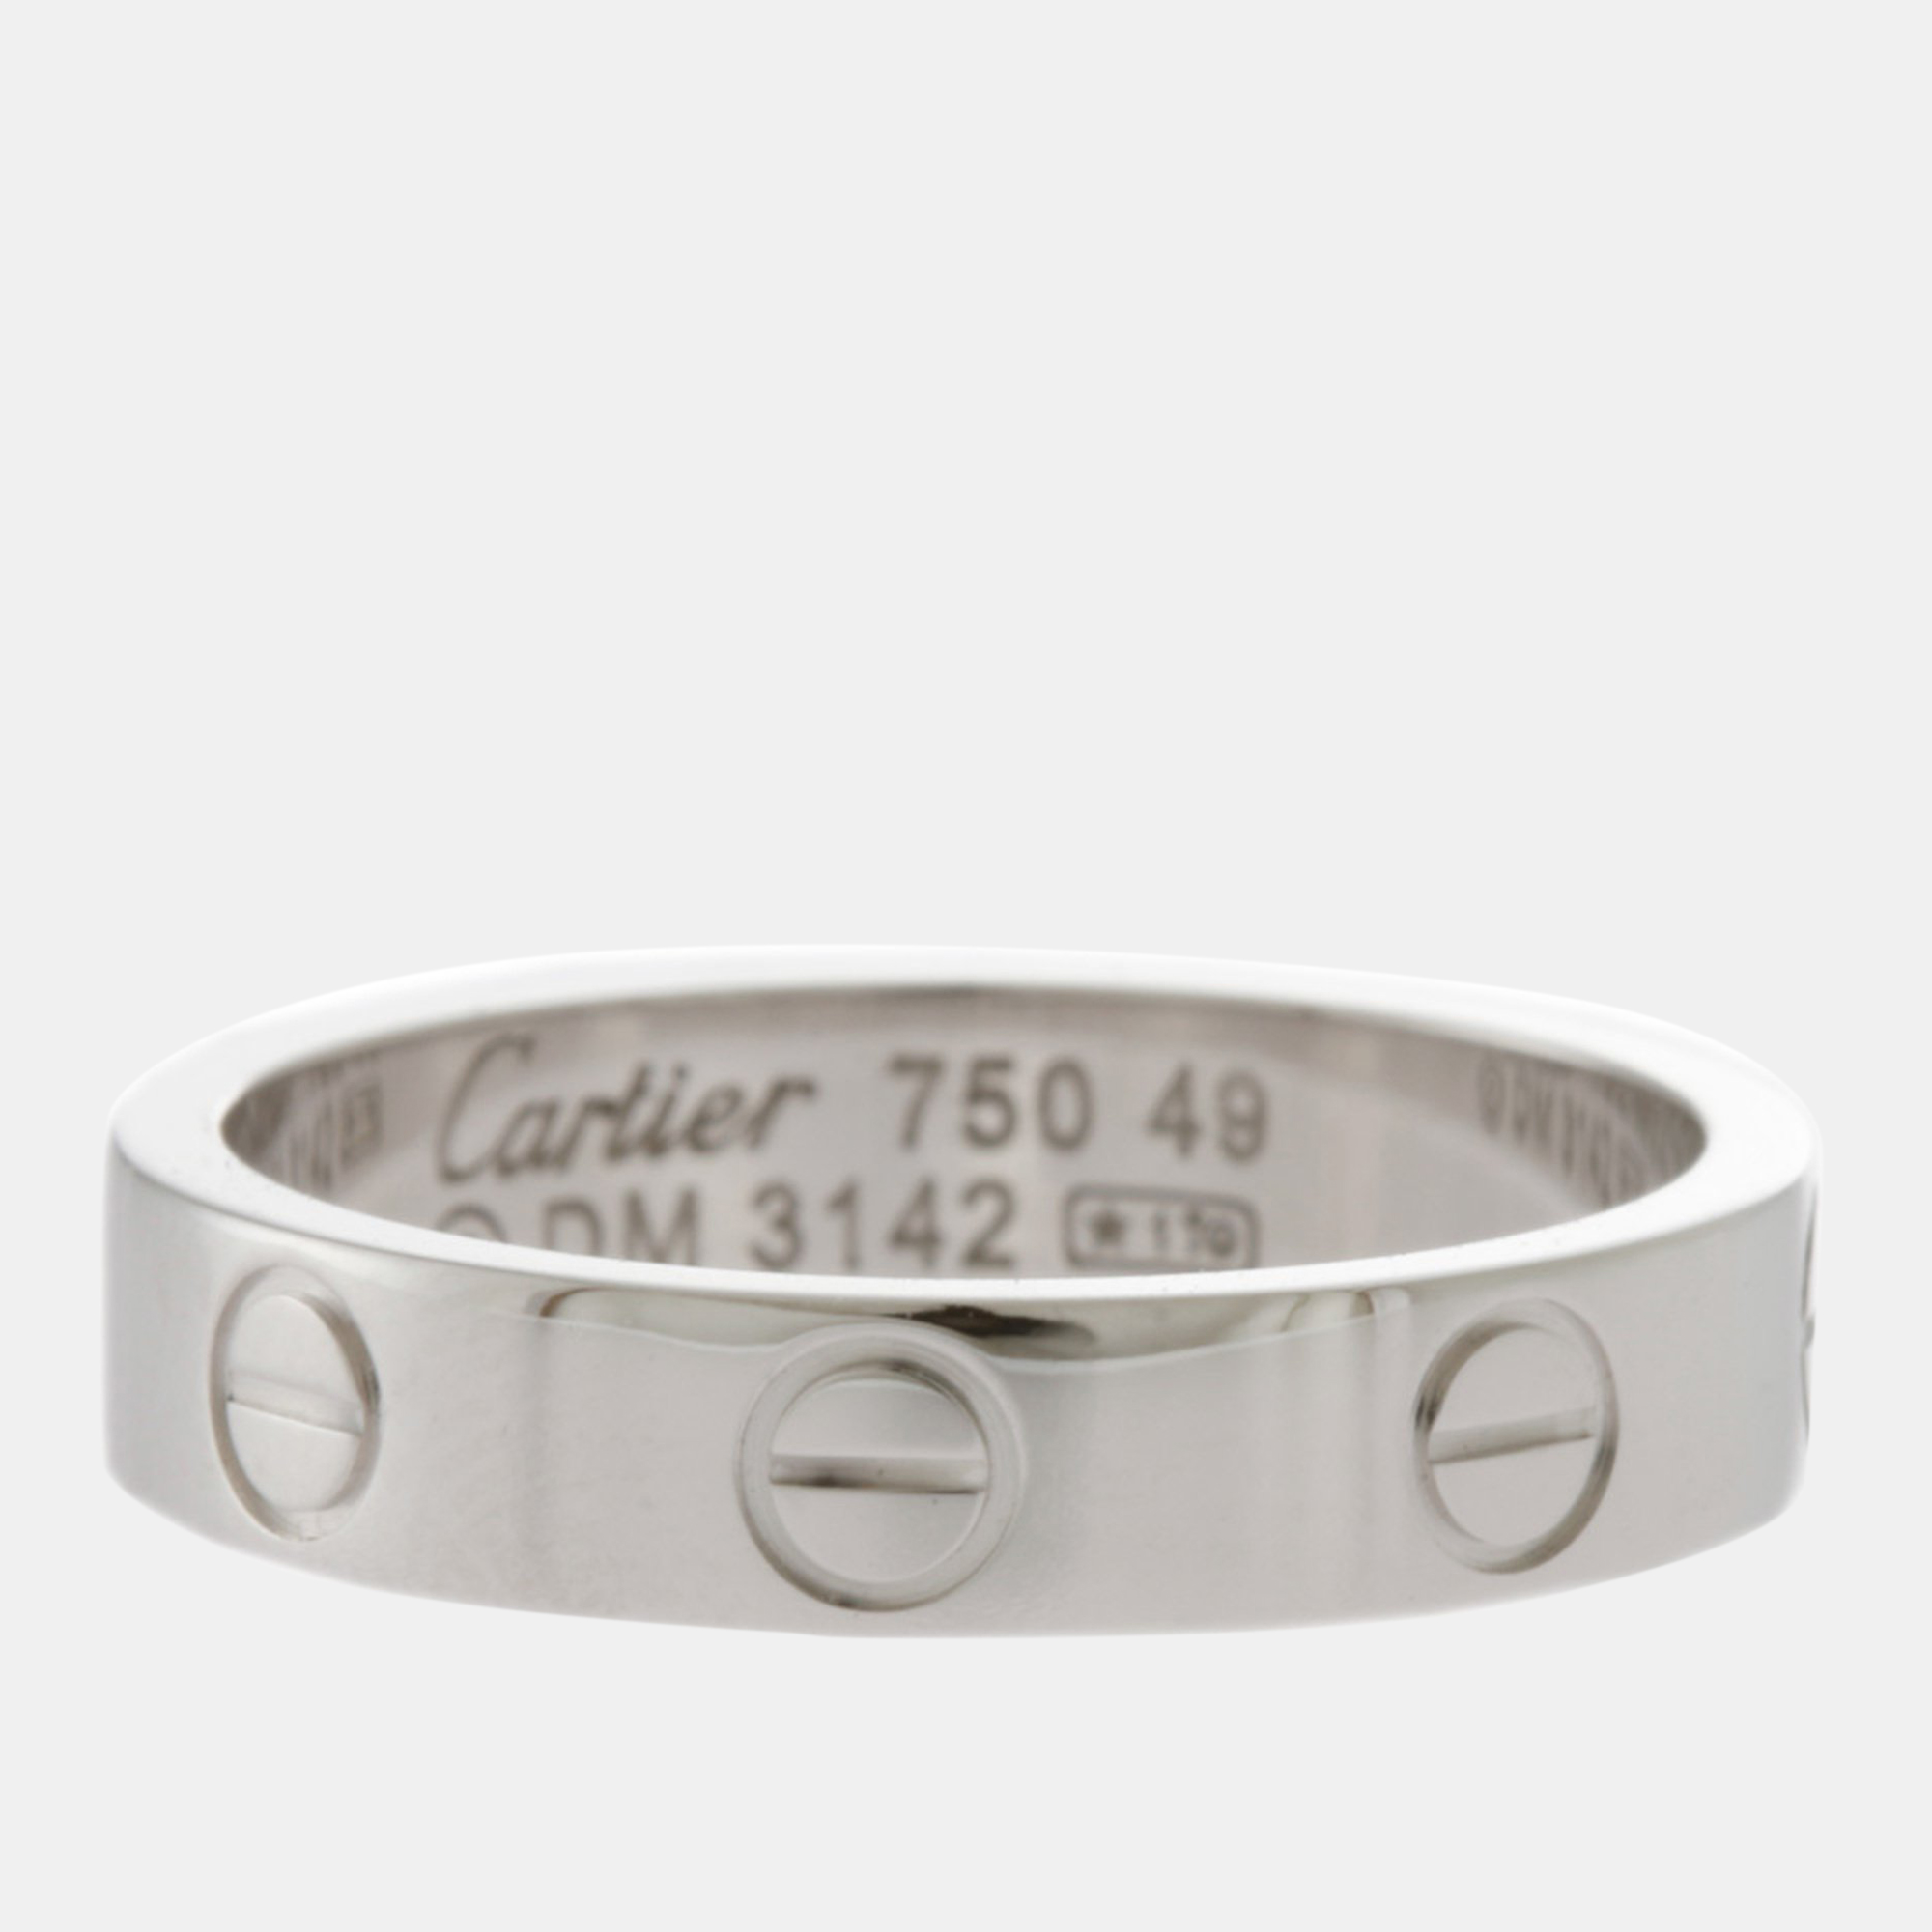 Cartier 18K White Gold Love Band Ring EU 49